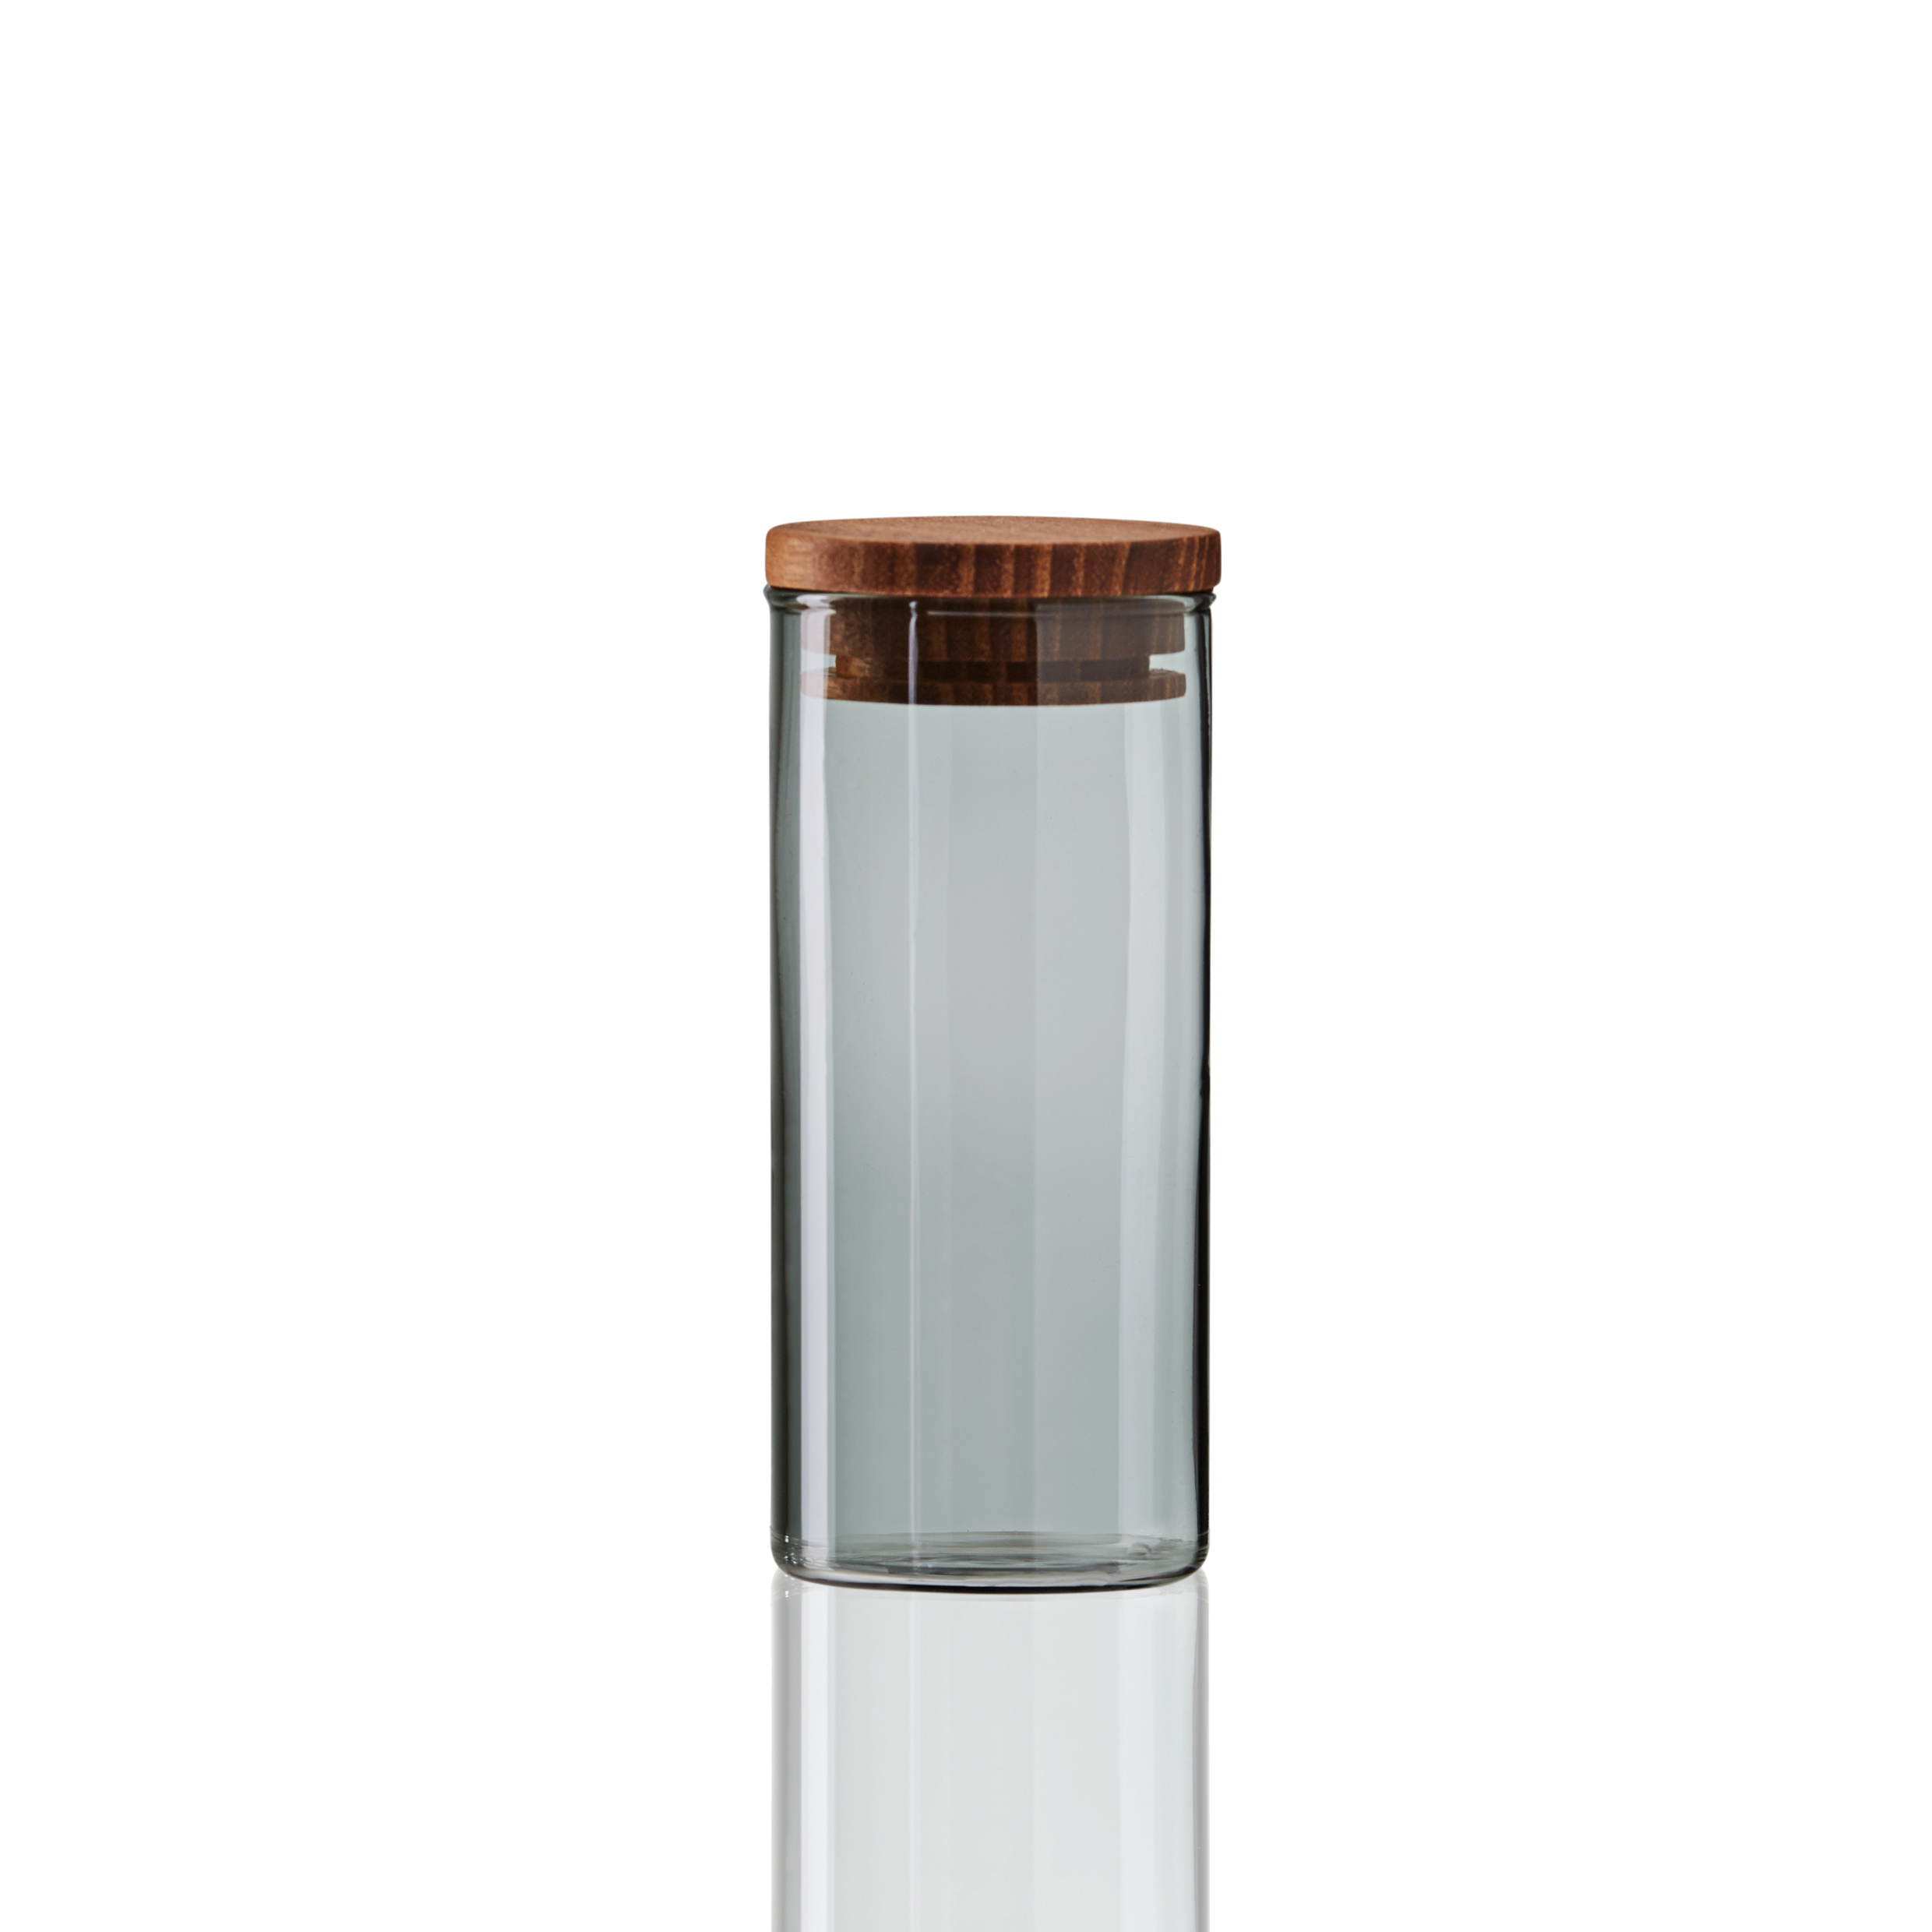 RYOT CLEAR GLASS STORAGE JAR 133ml Accessories Raw Papers Wood Luxury Shine Jars 